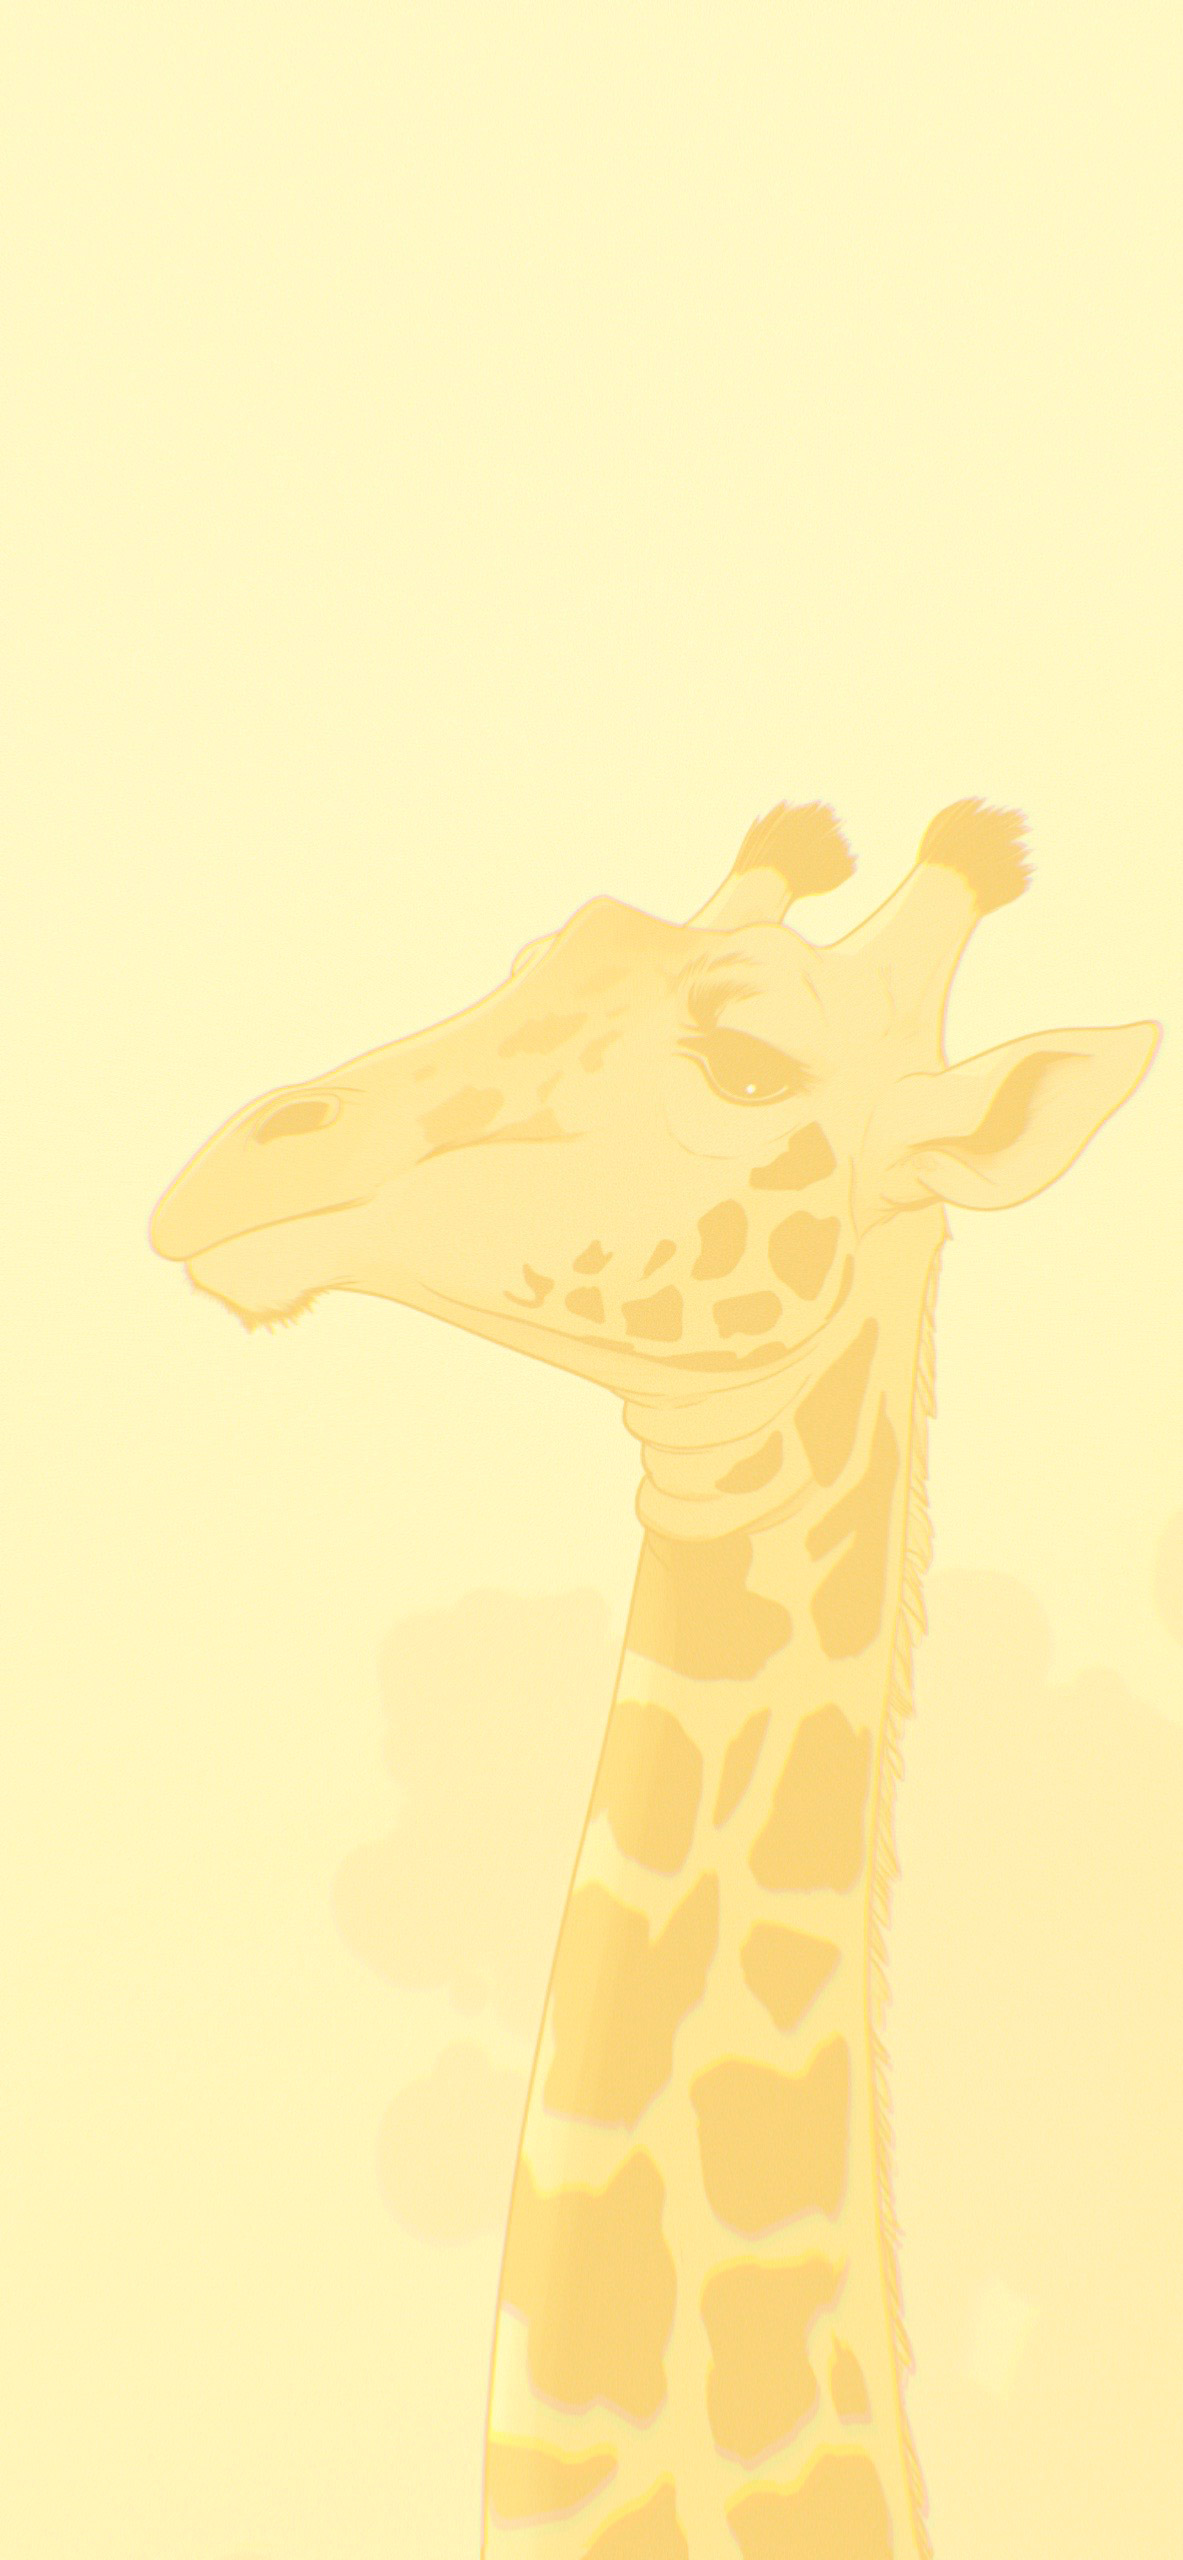 giraffe light yellow background